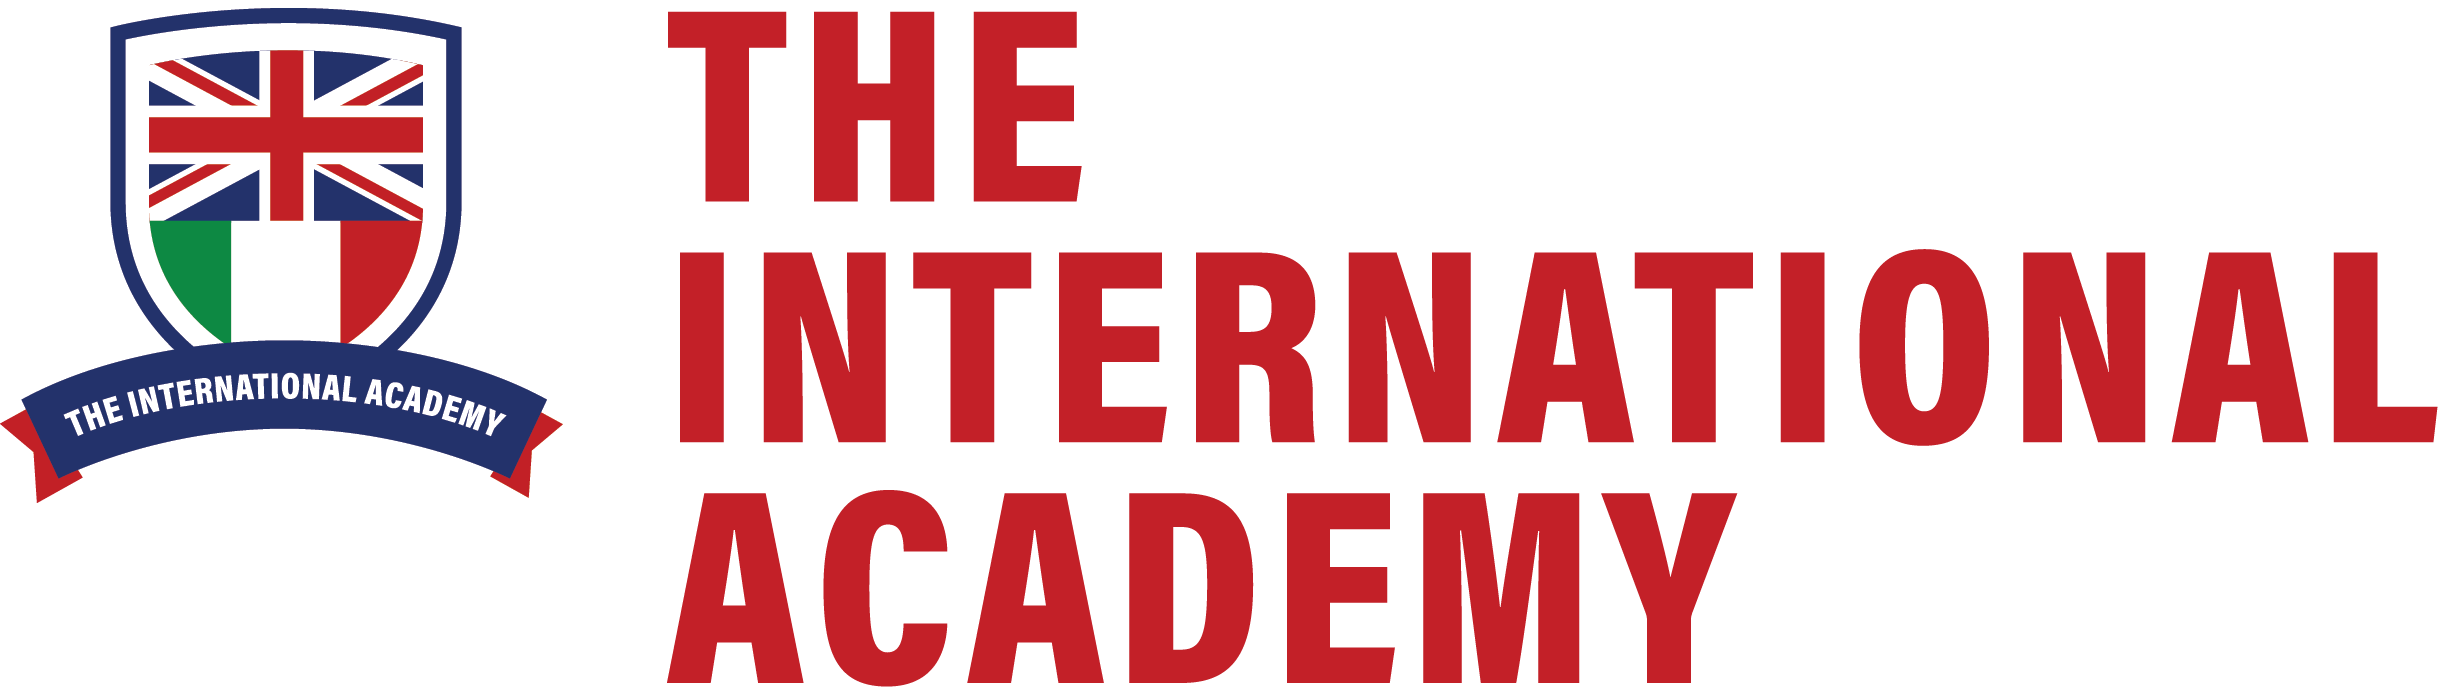 academy logo senza scritte21-22